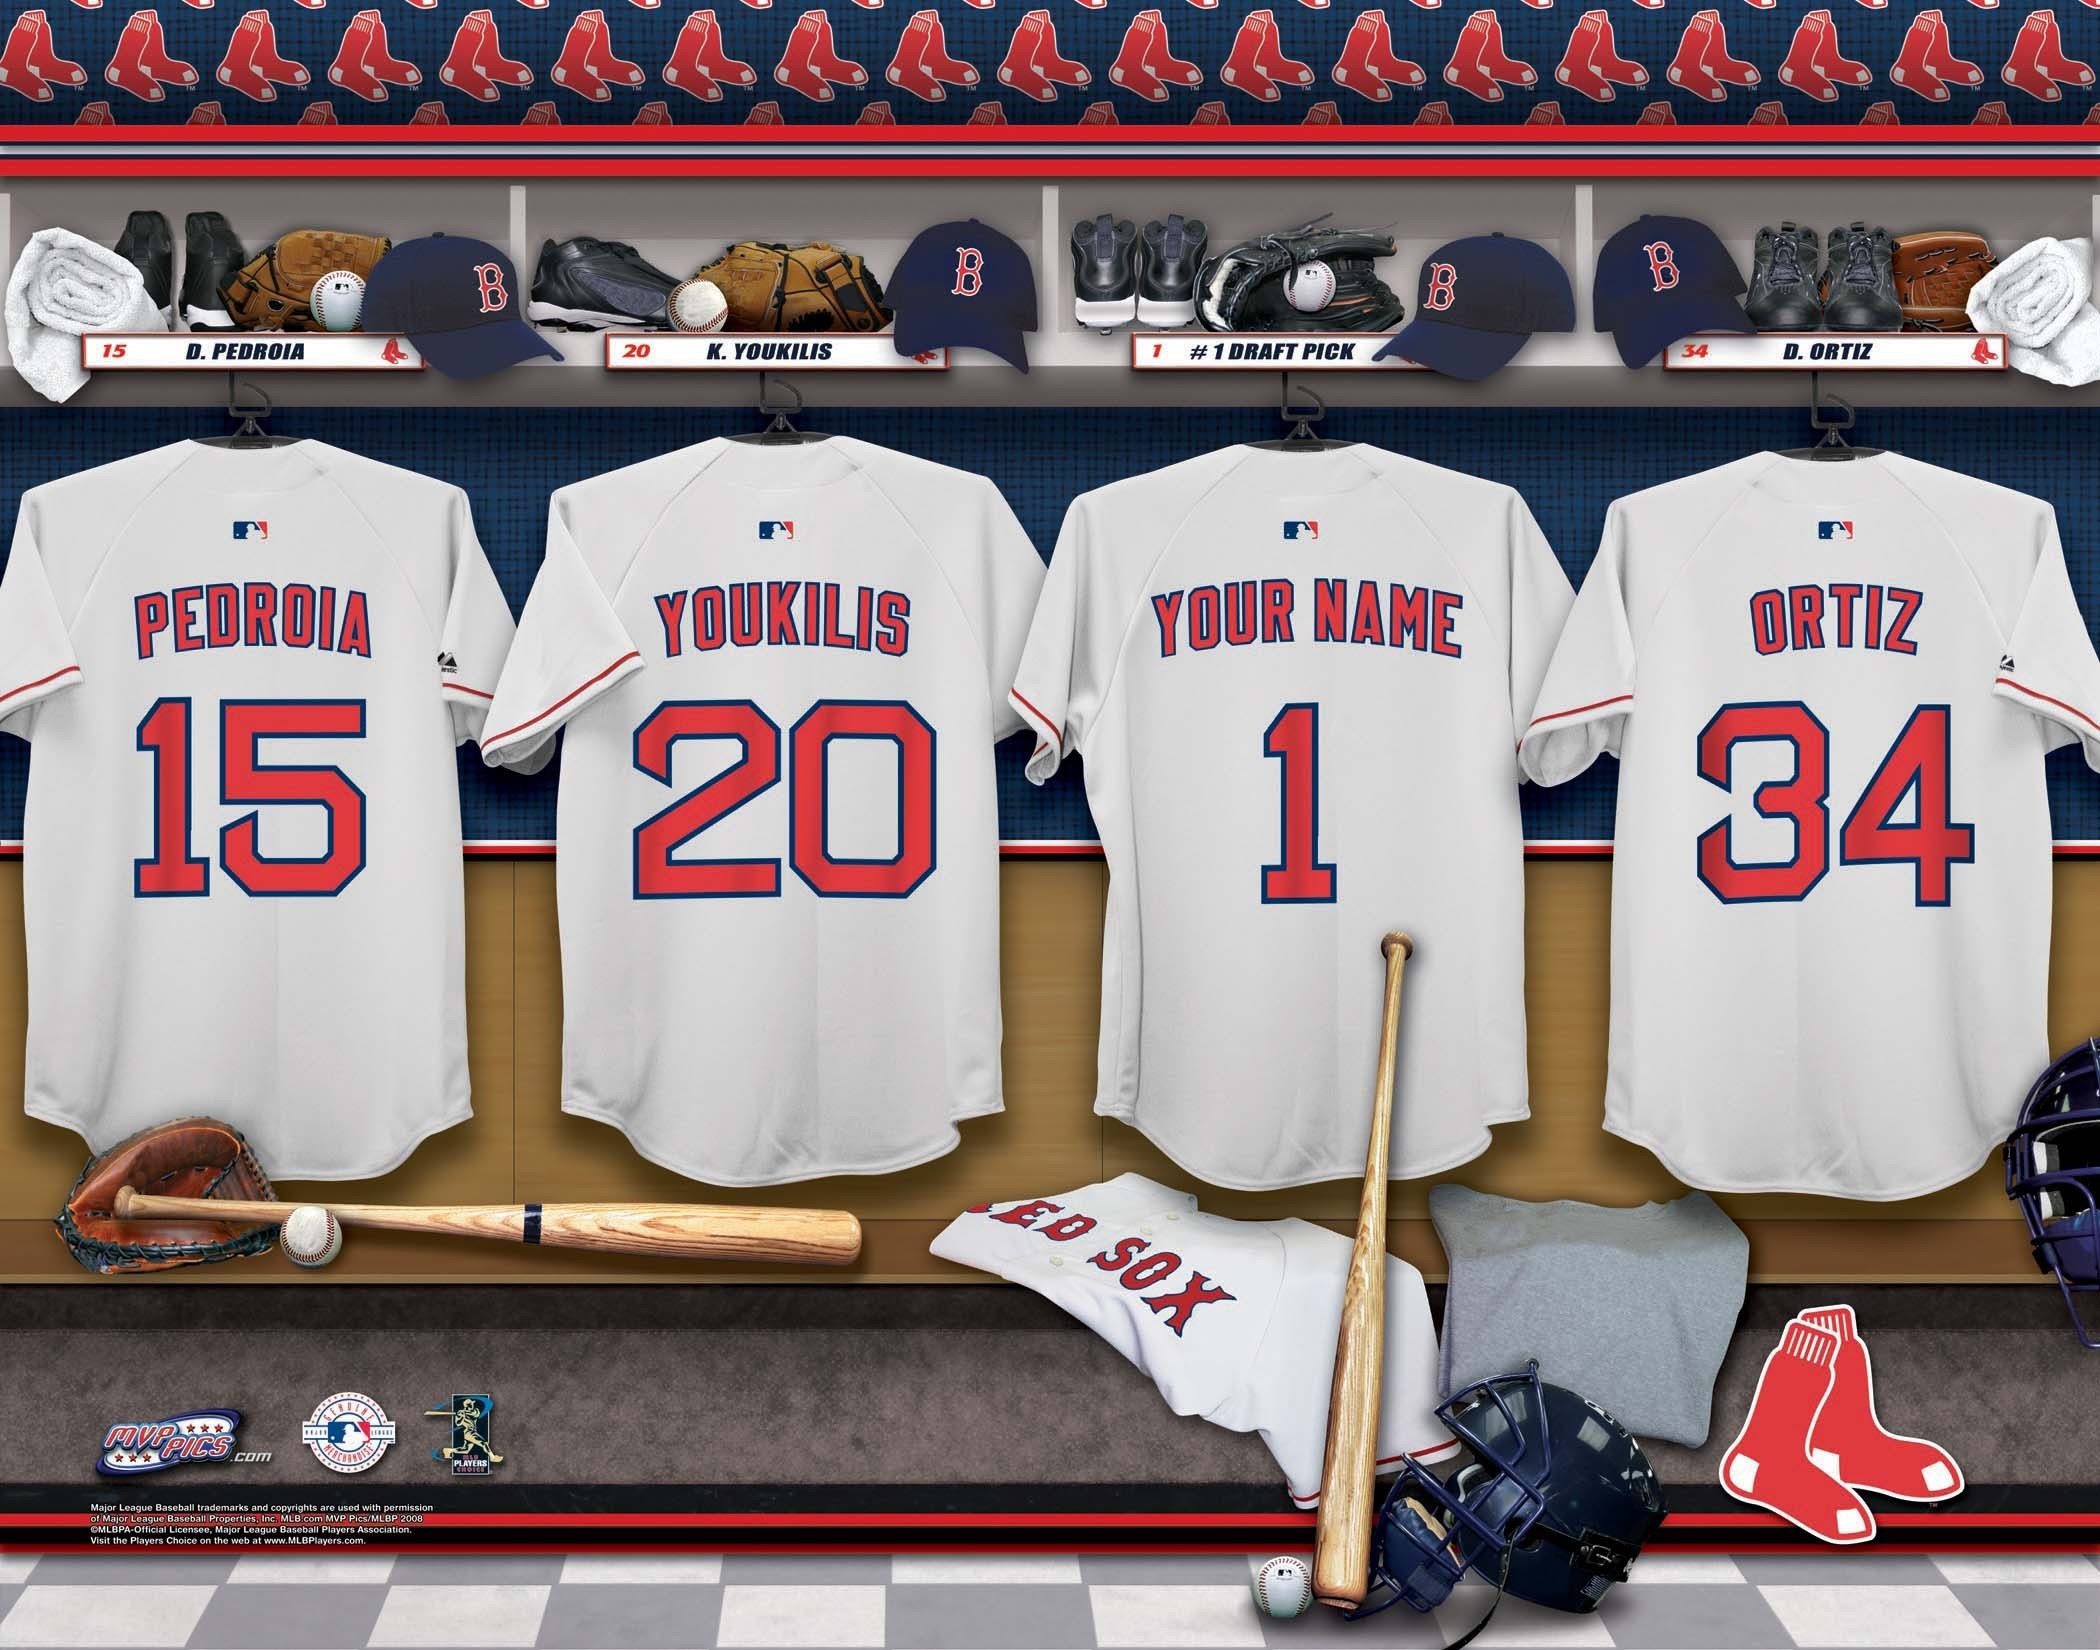 Boston Red Sox Wallpaper Screensavers (61+ images)